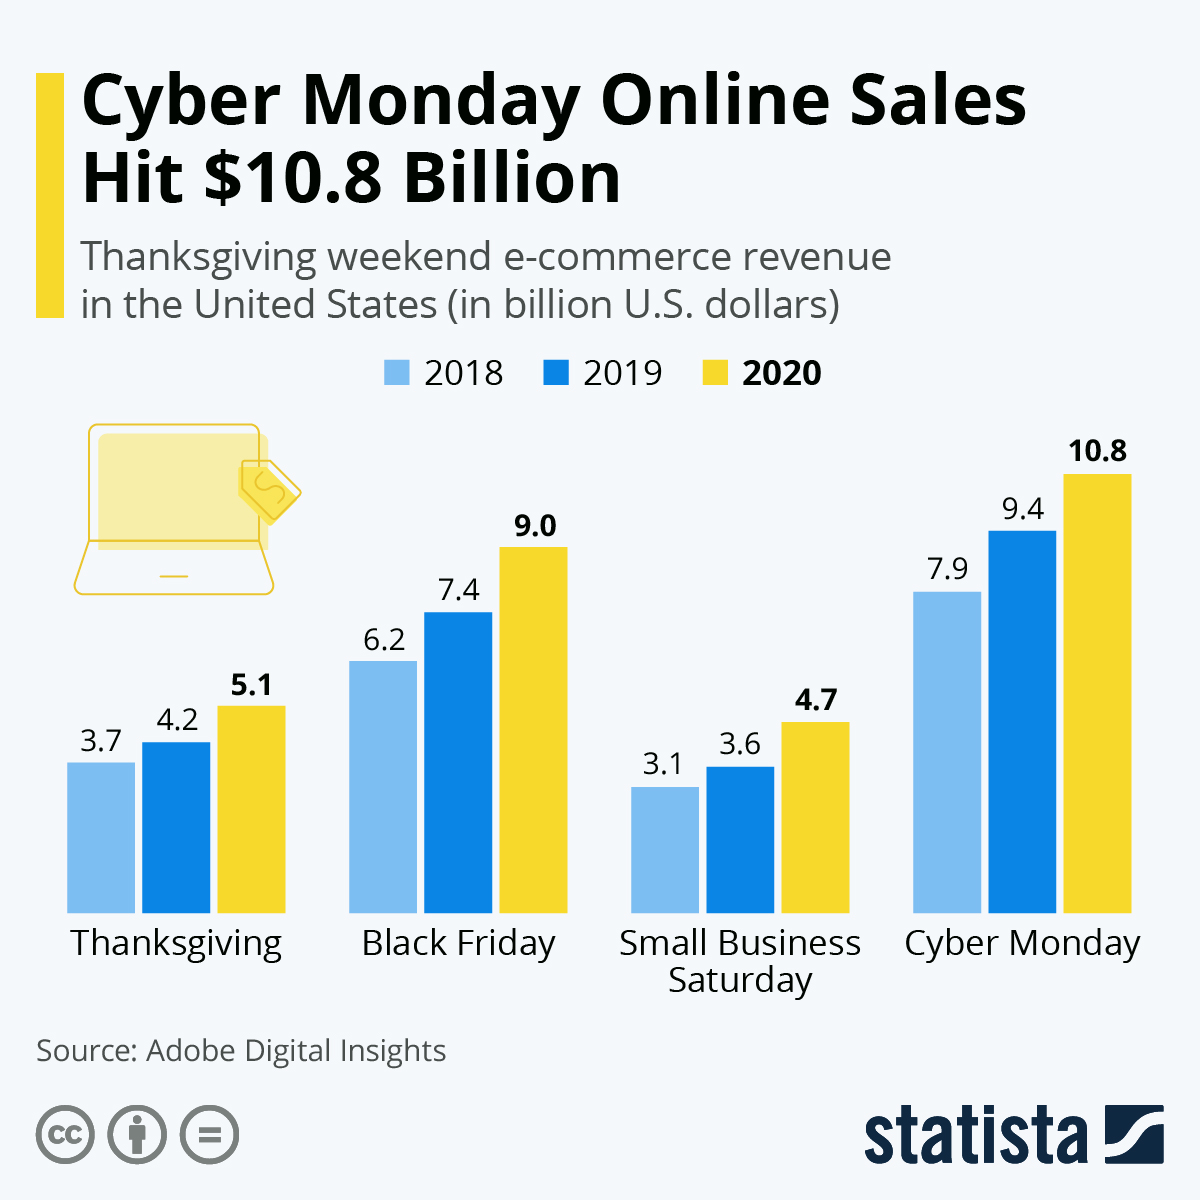 Cyber Monday Online Sales statistics